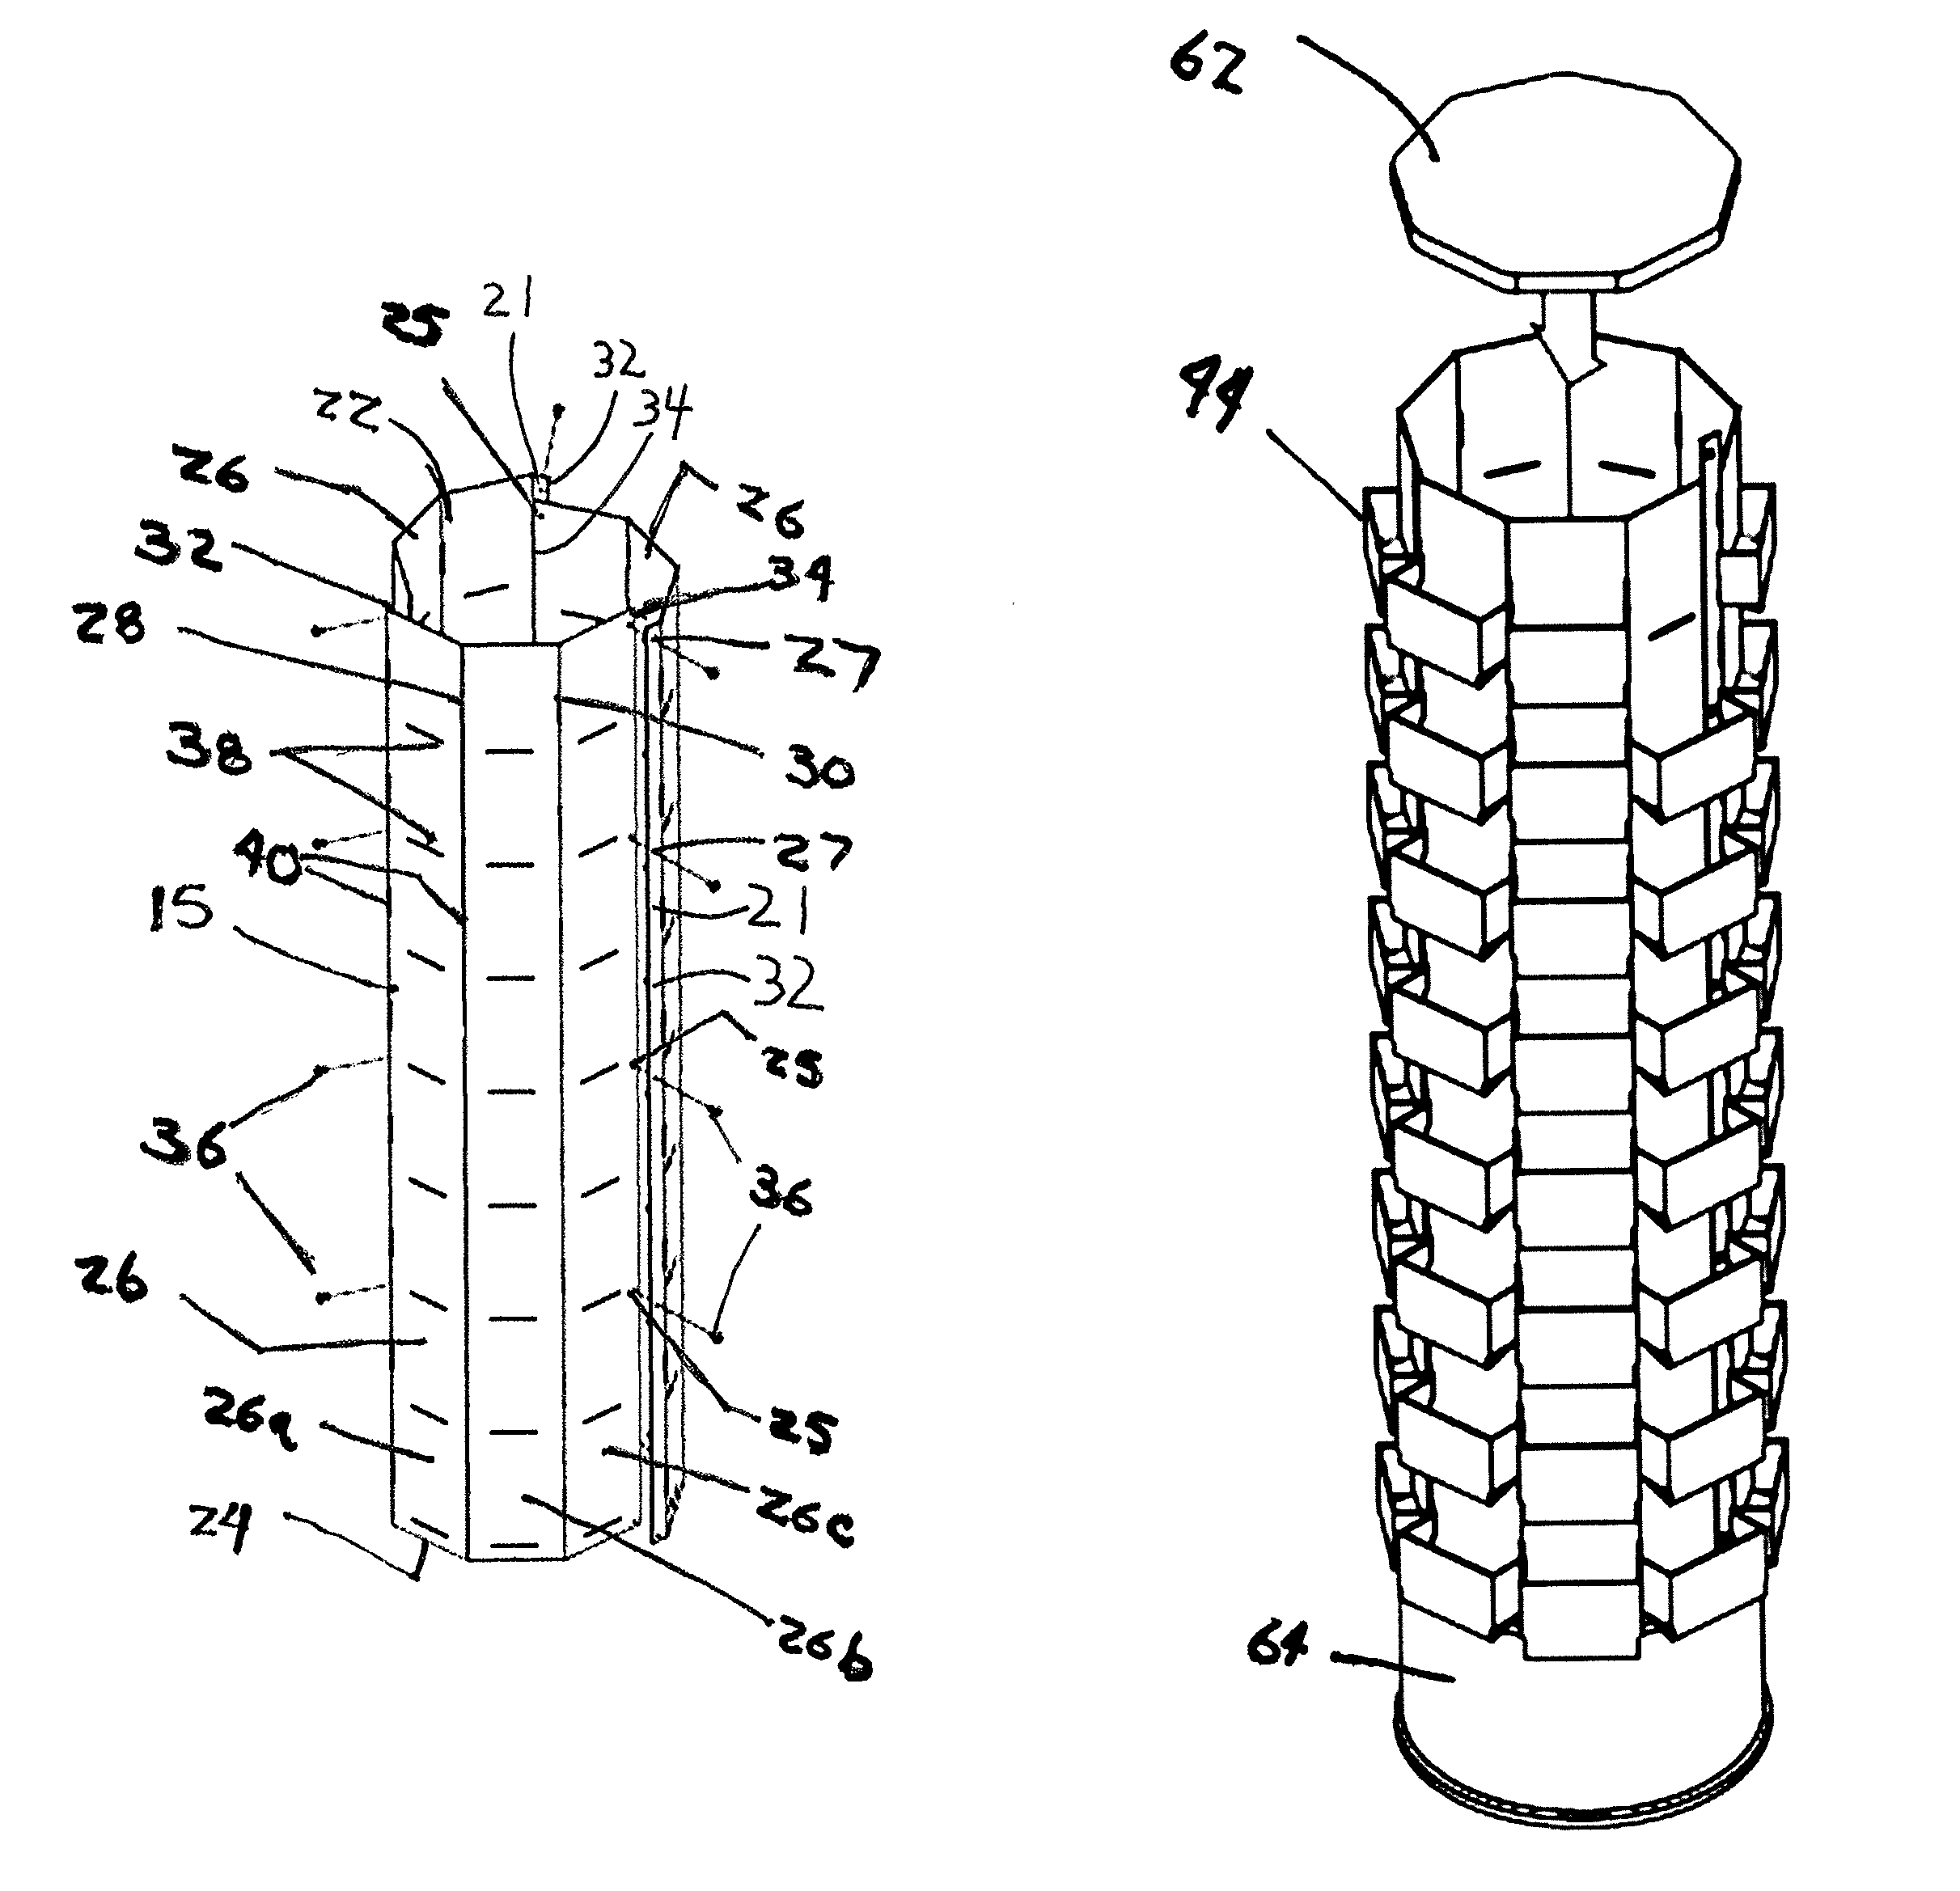 Spinning tower rack